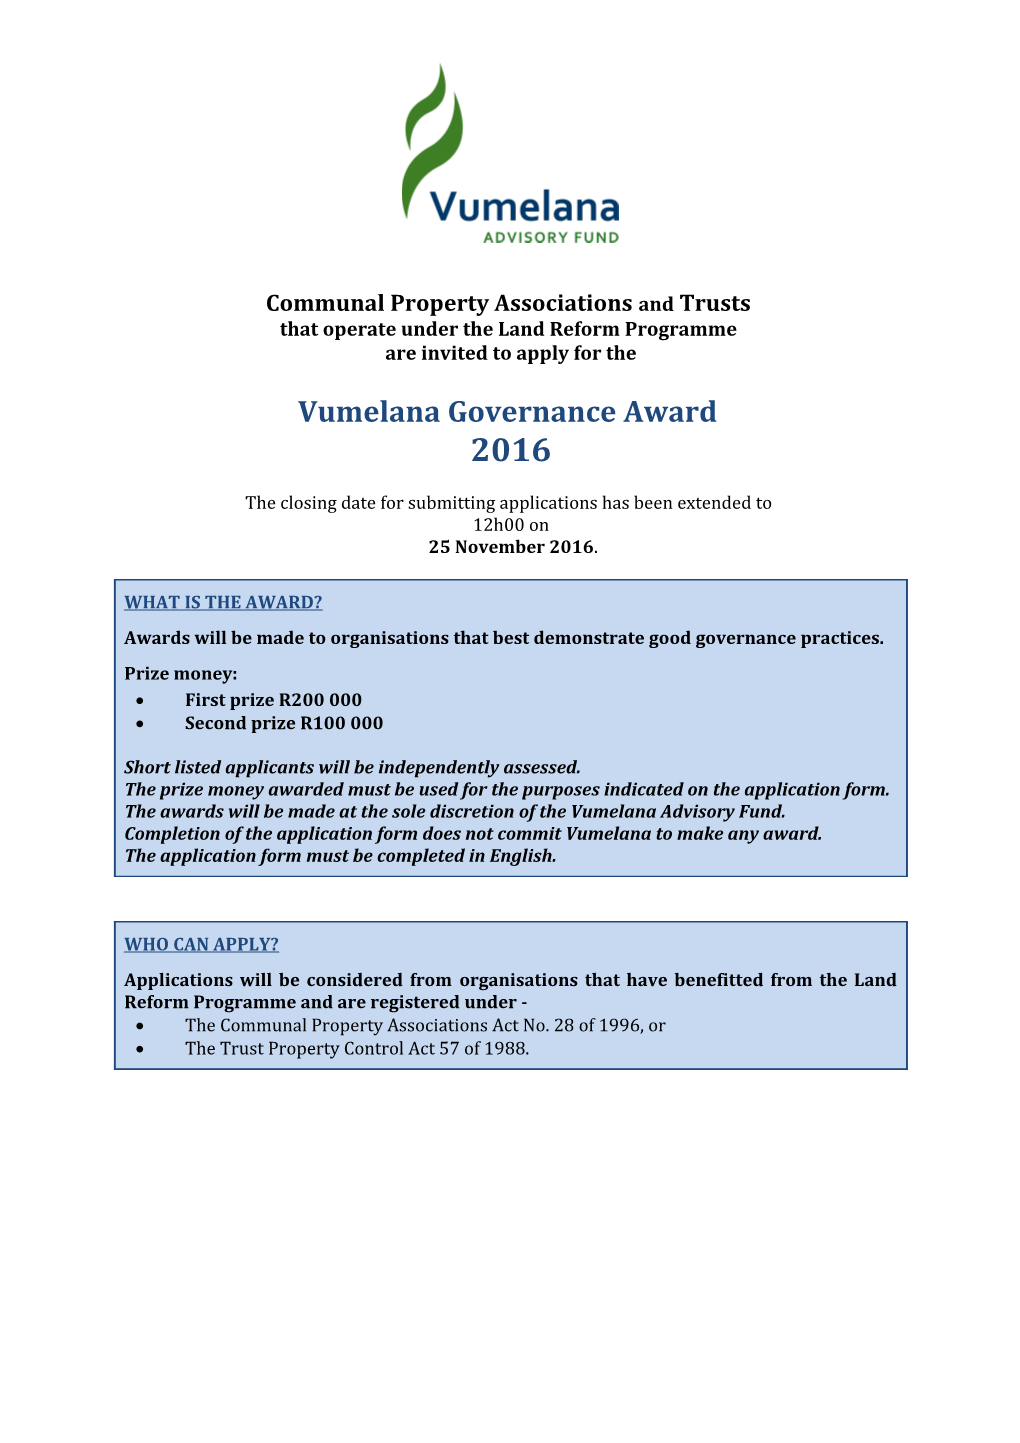 Vumelana Governance Award - Rewarding Excellence in Communal Property Institution Governance